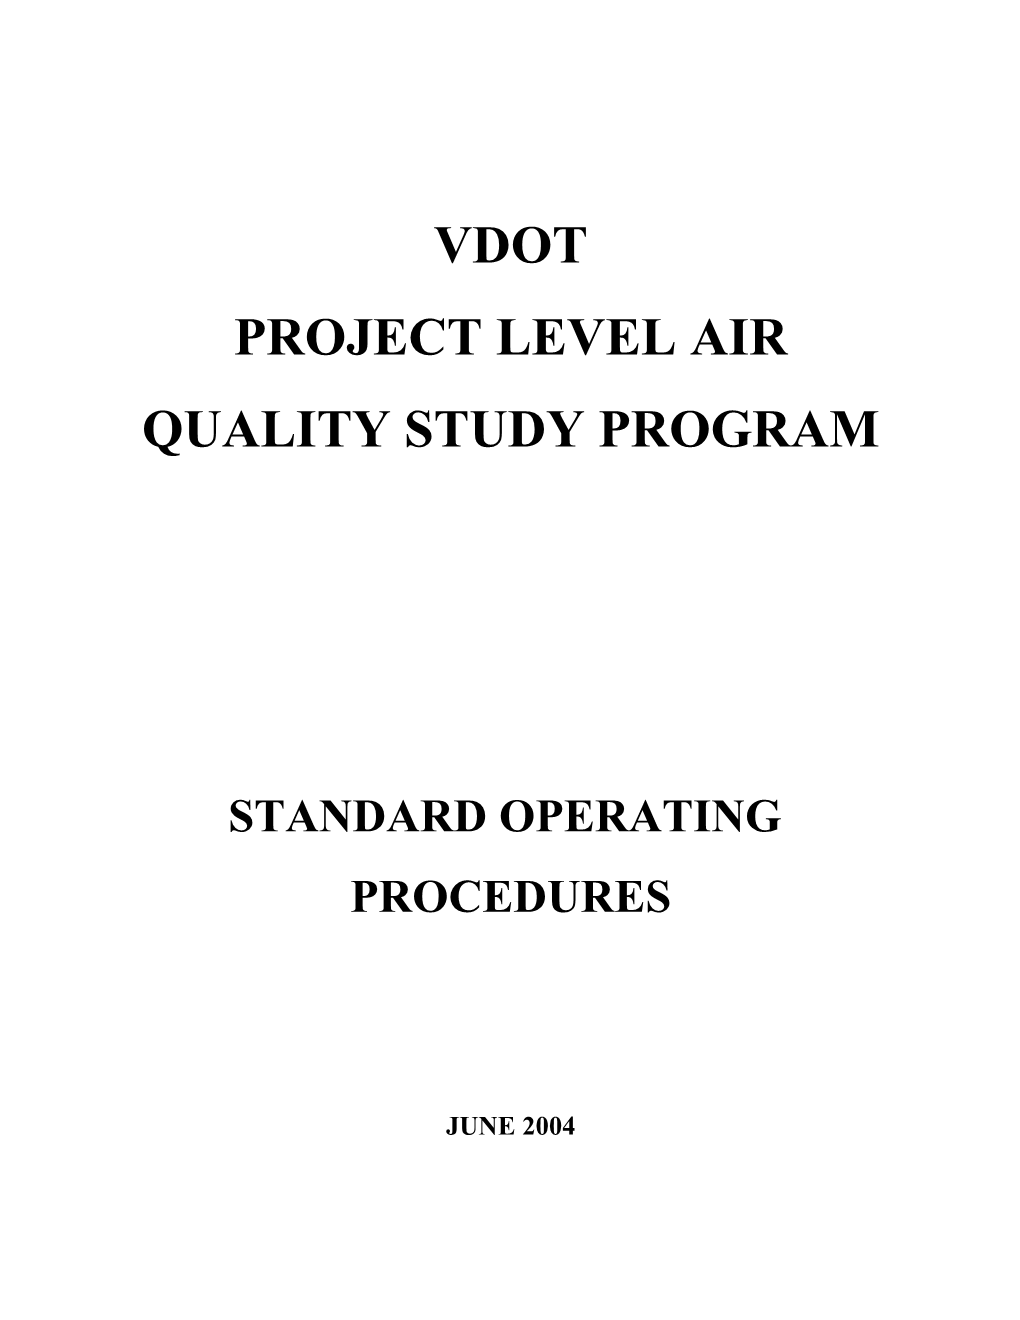 VDOT Project Level Air Quality Study Program